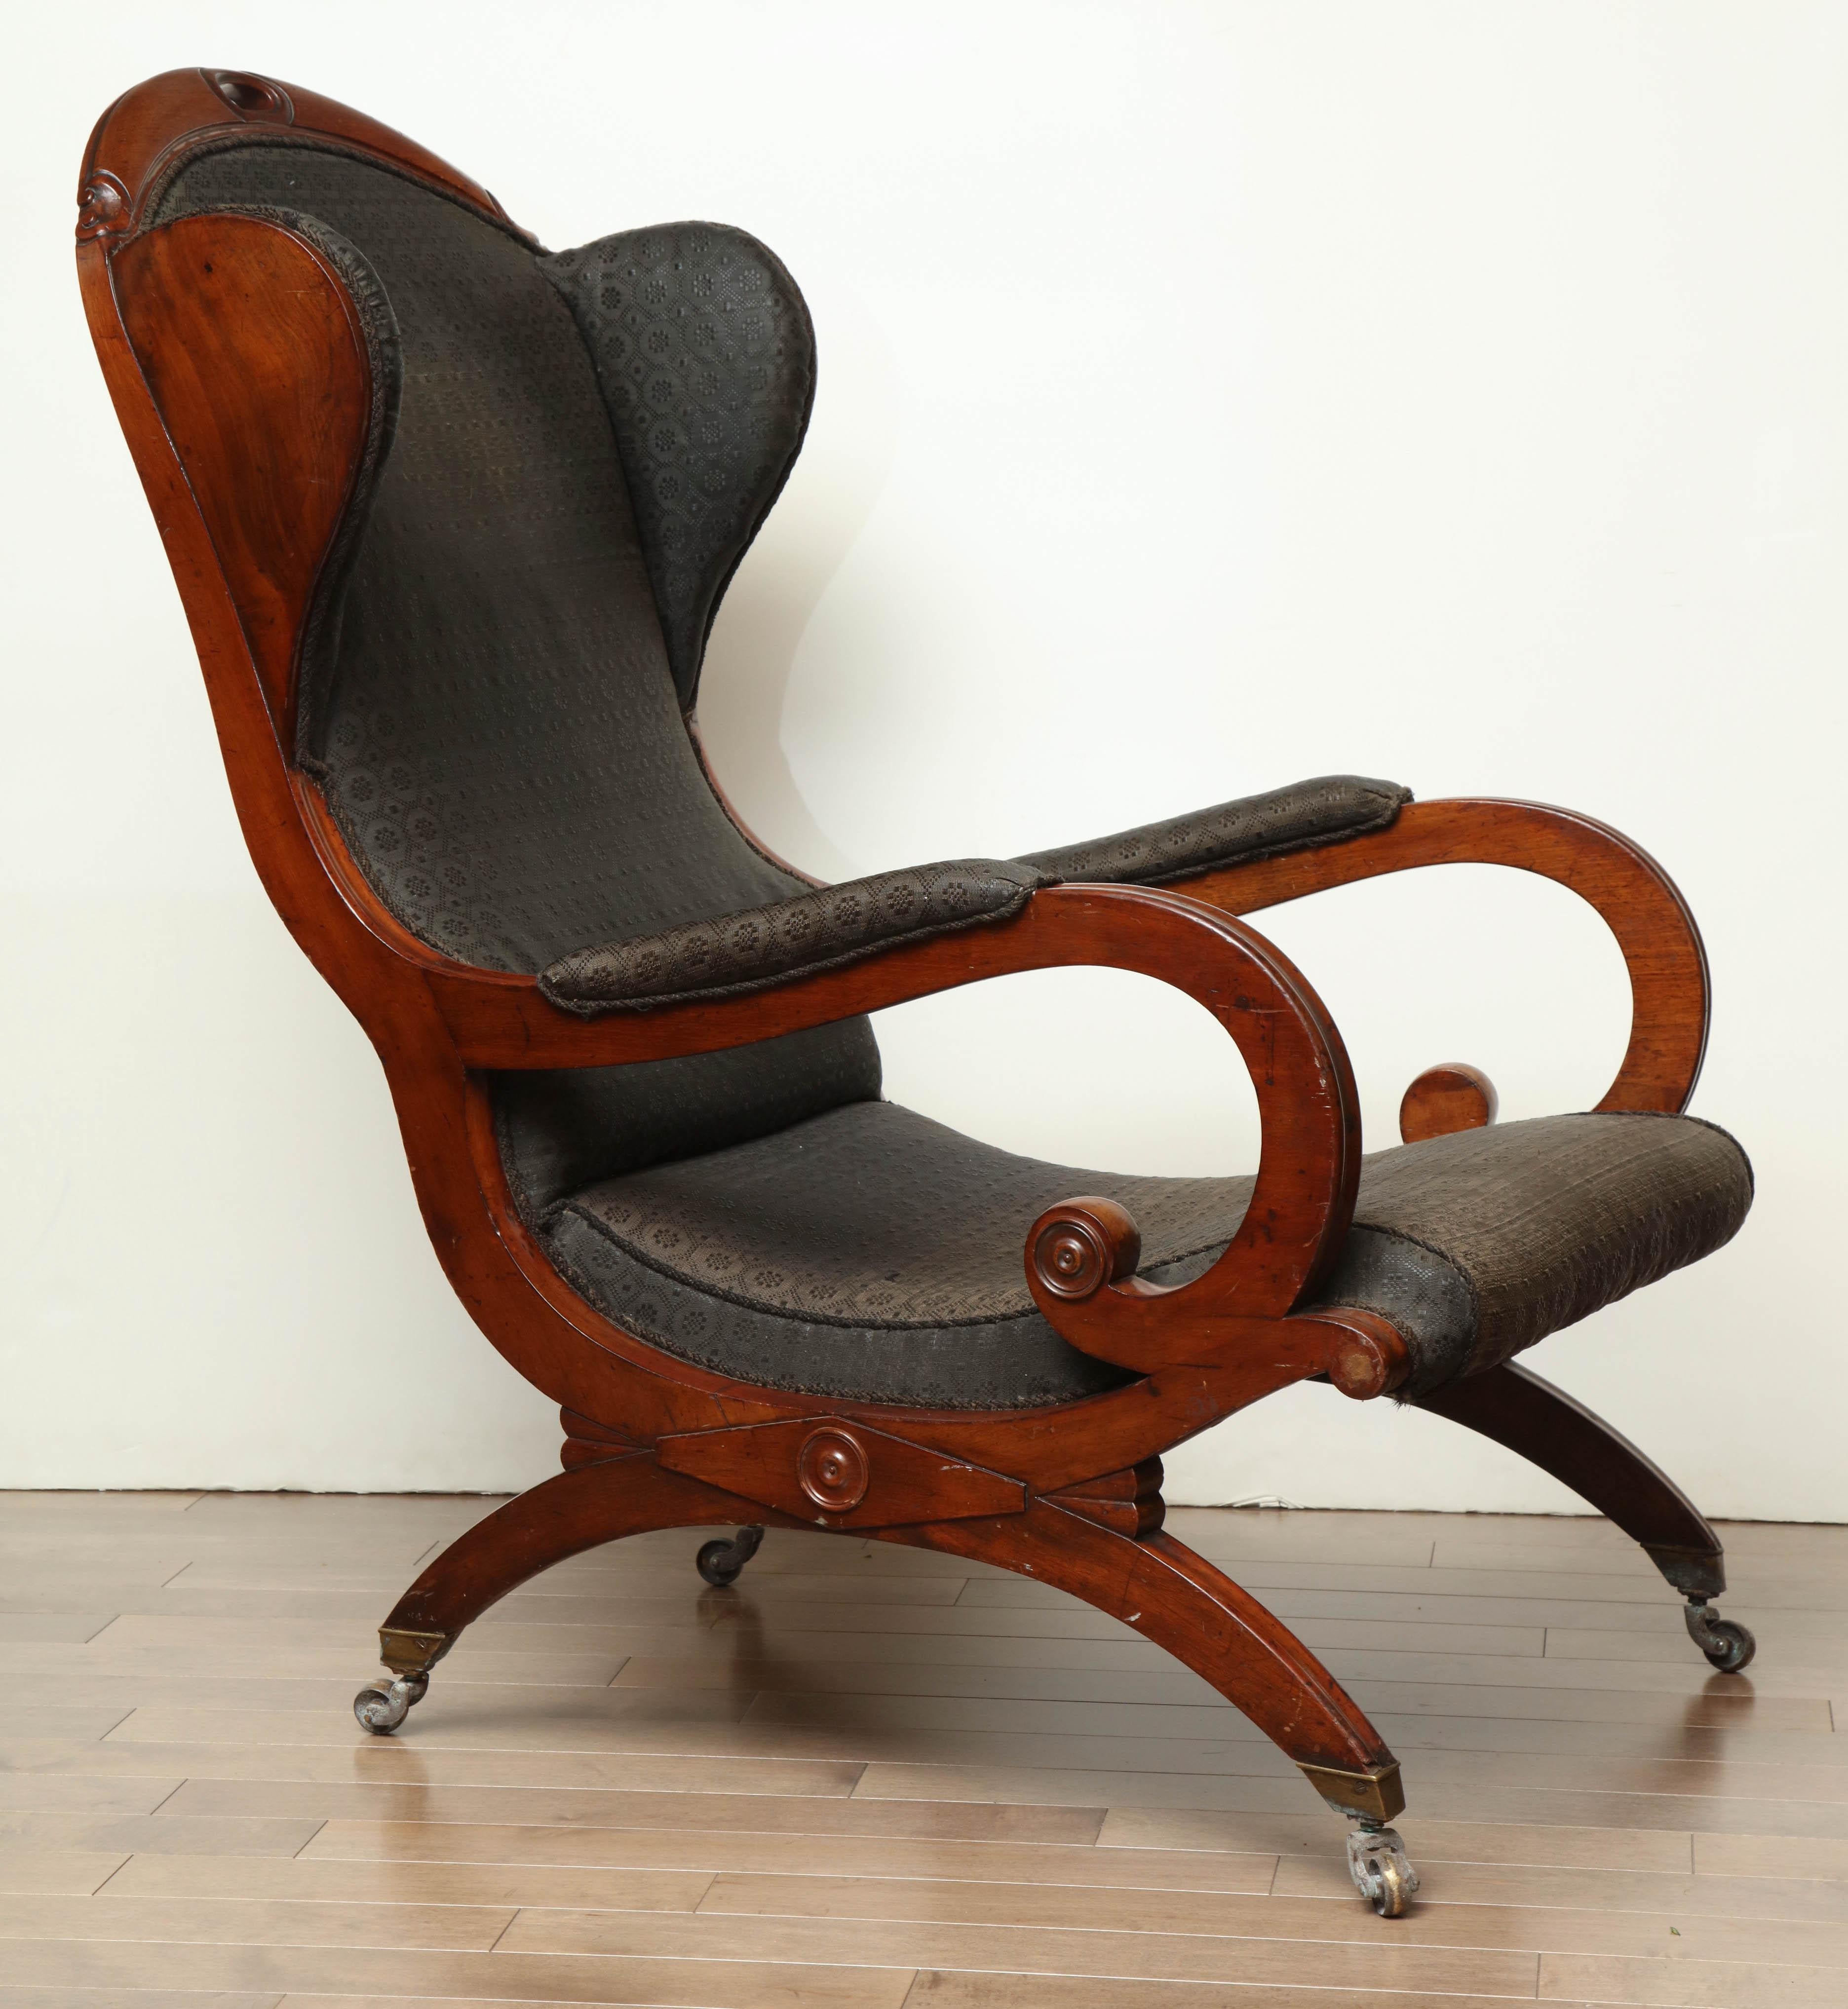 Early 19th century mahogany wing chair.